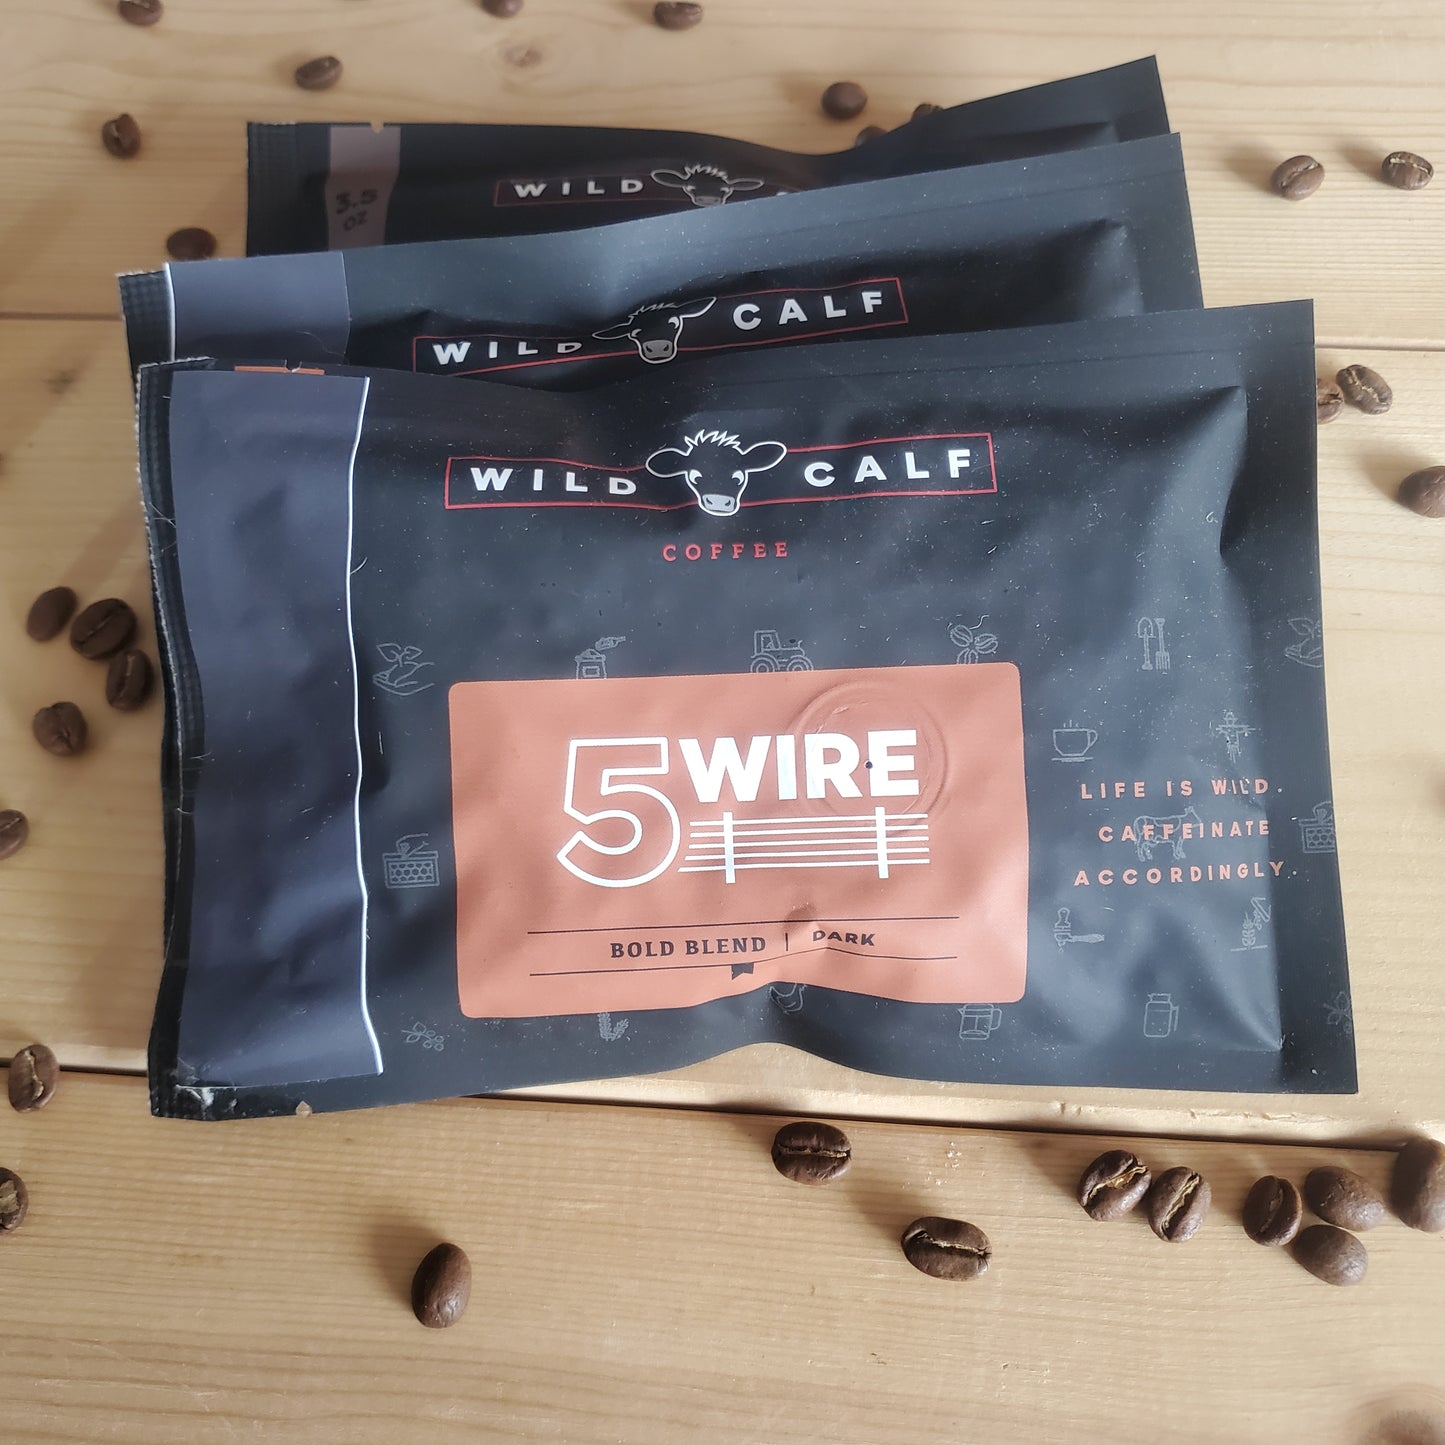 Wild Calf Coffee Sample